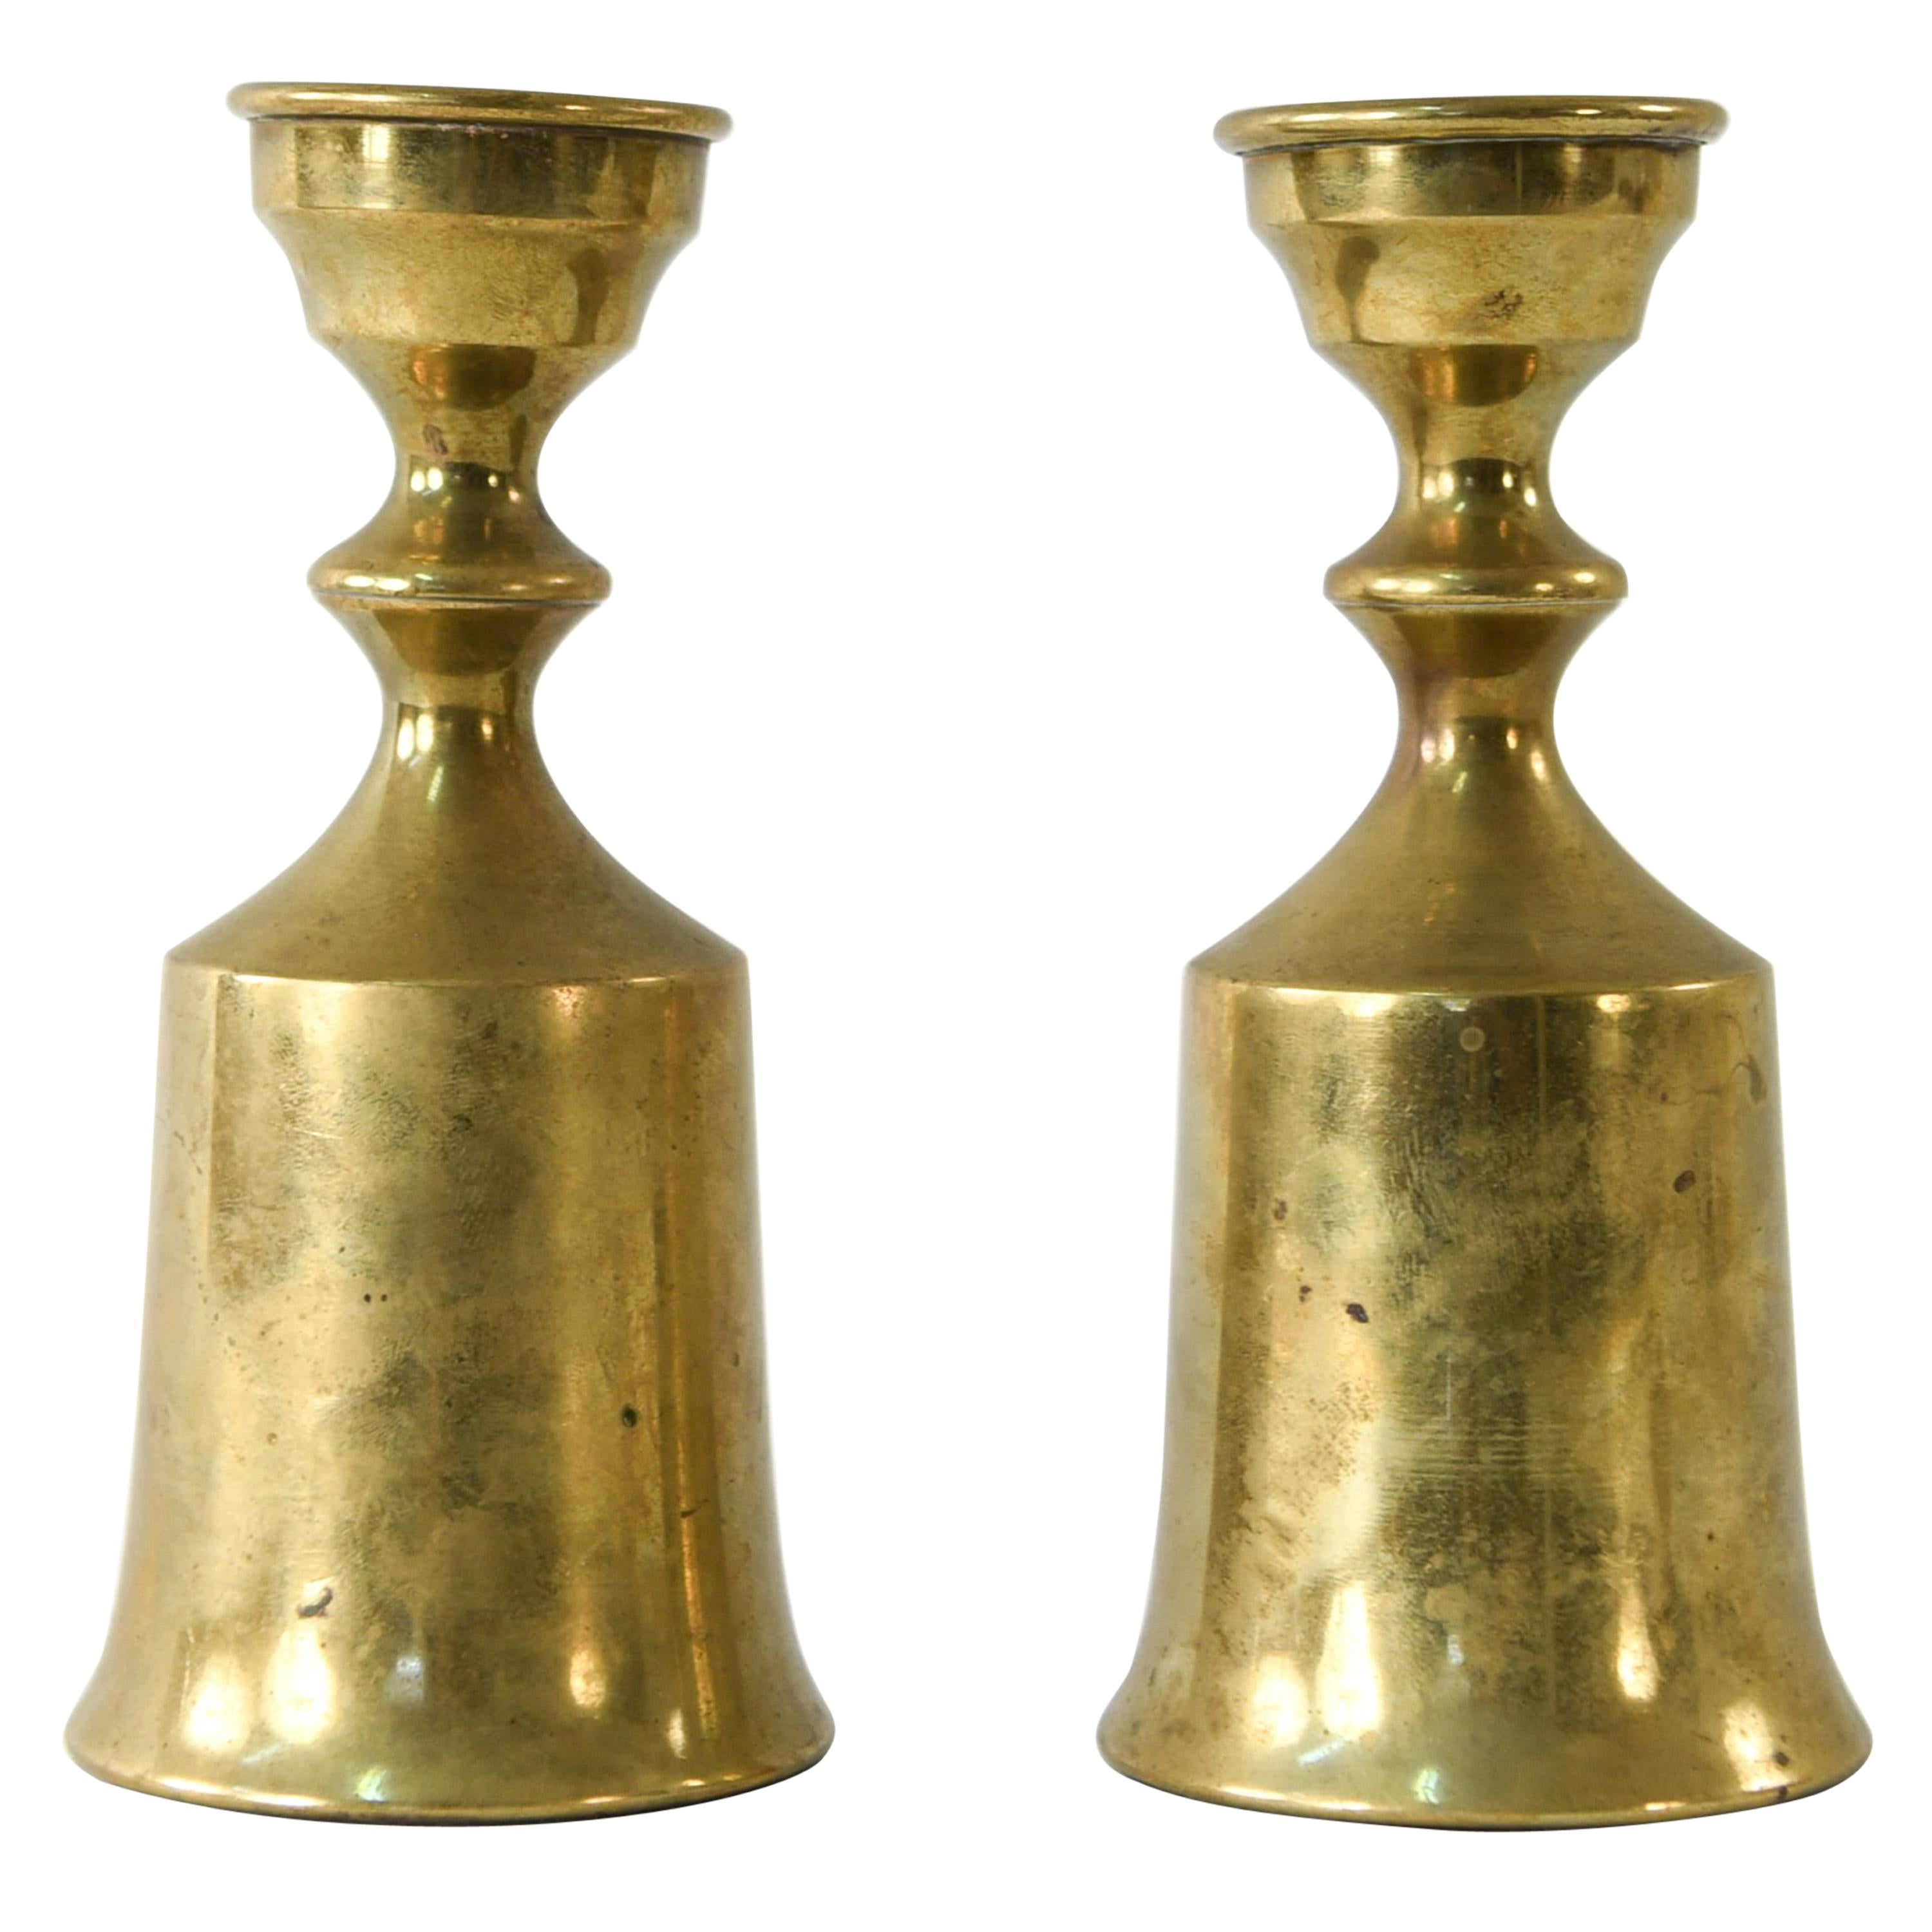 Pair of Brass Candleholders by Danish Designer Jens H. Quistgaard